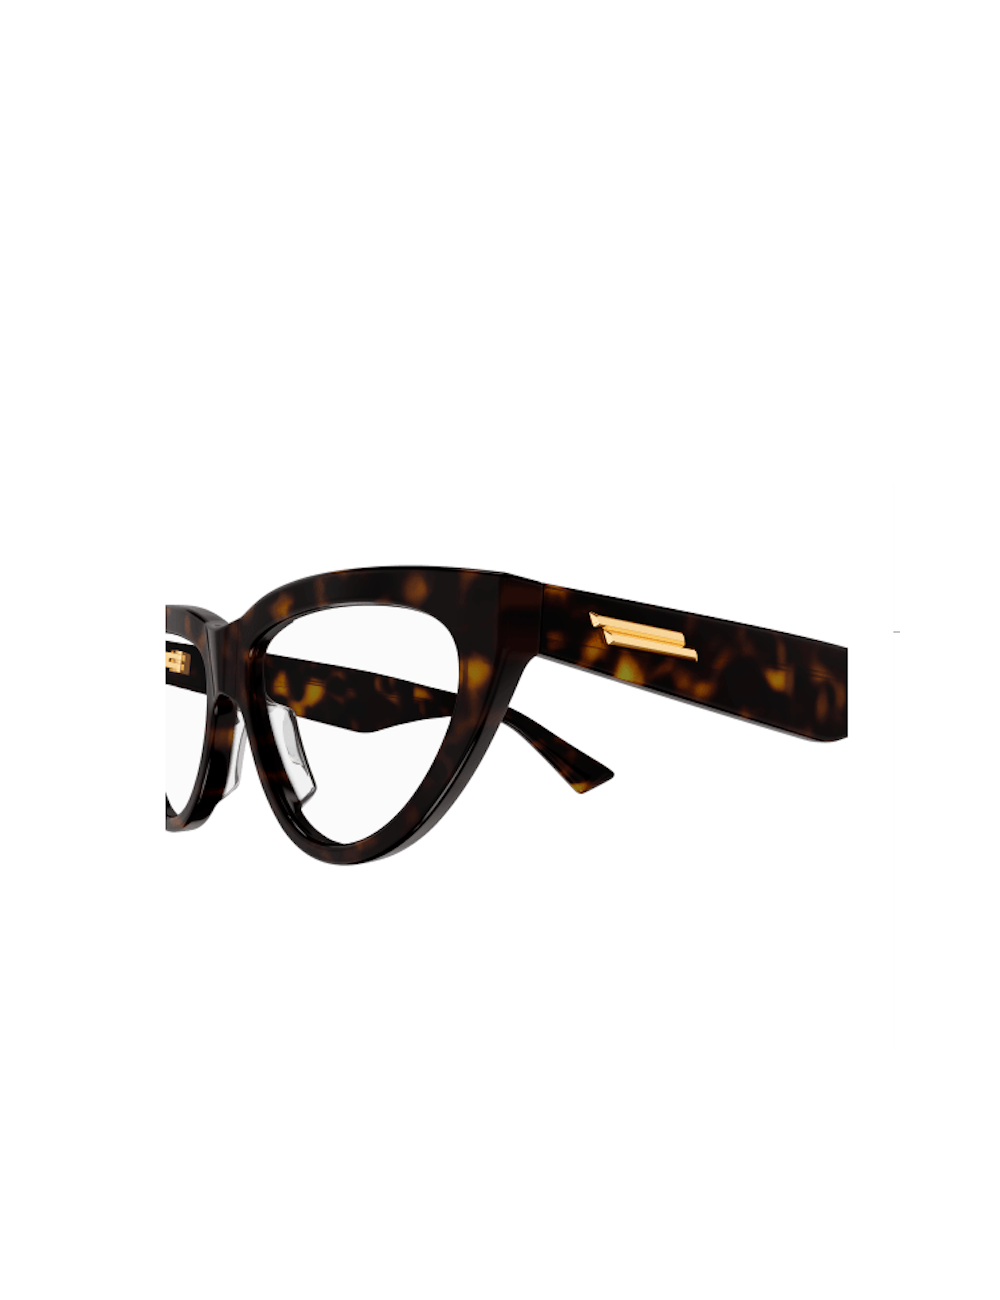 Bottega Veneta Women's Transparent Cat-Eye Frame Sunglasses